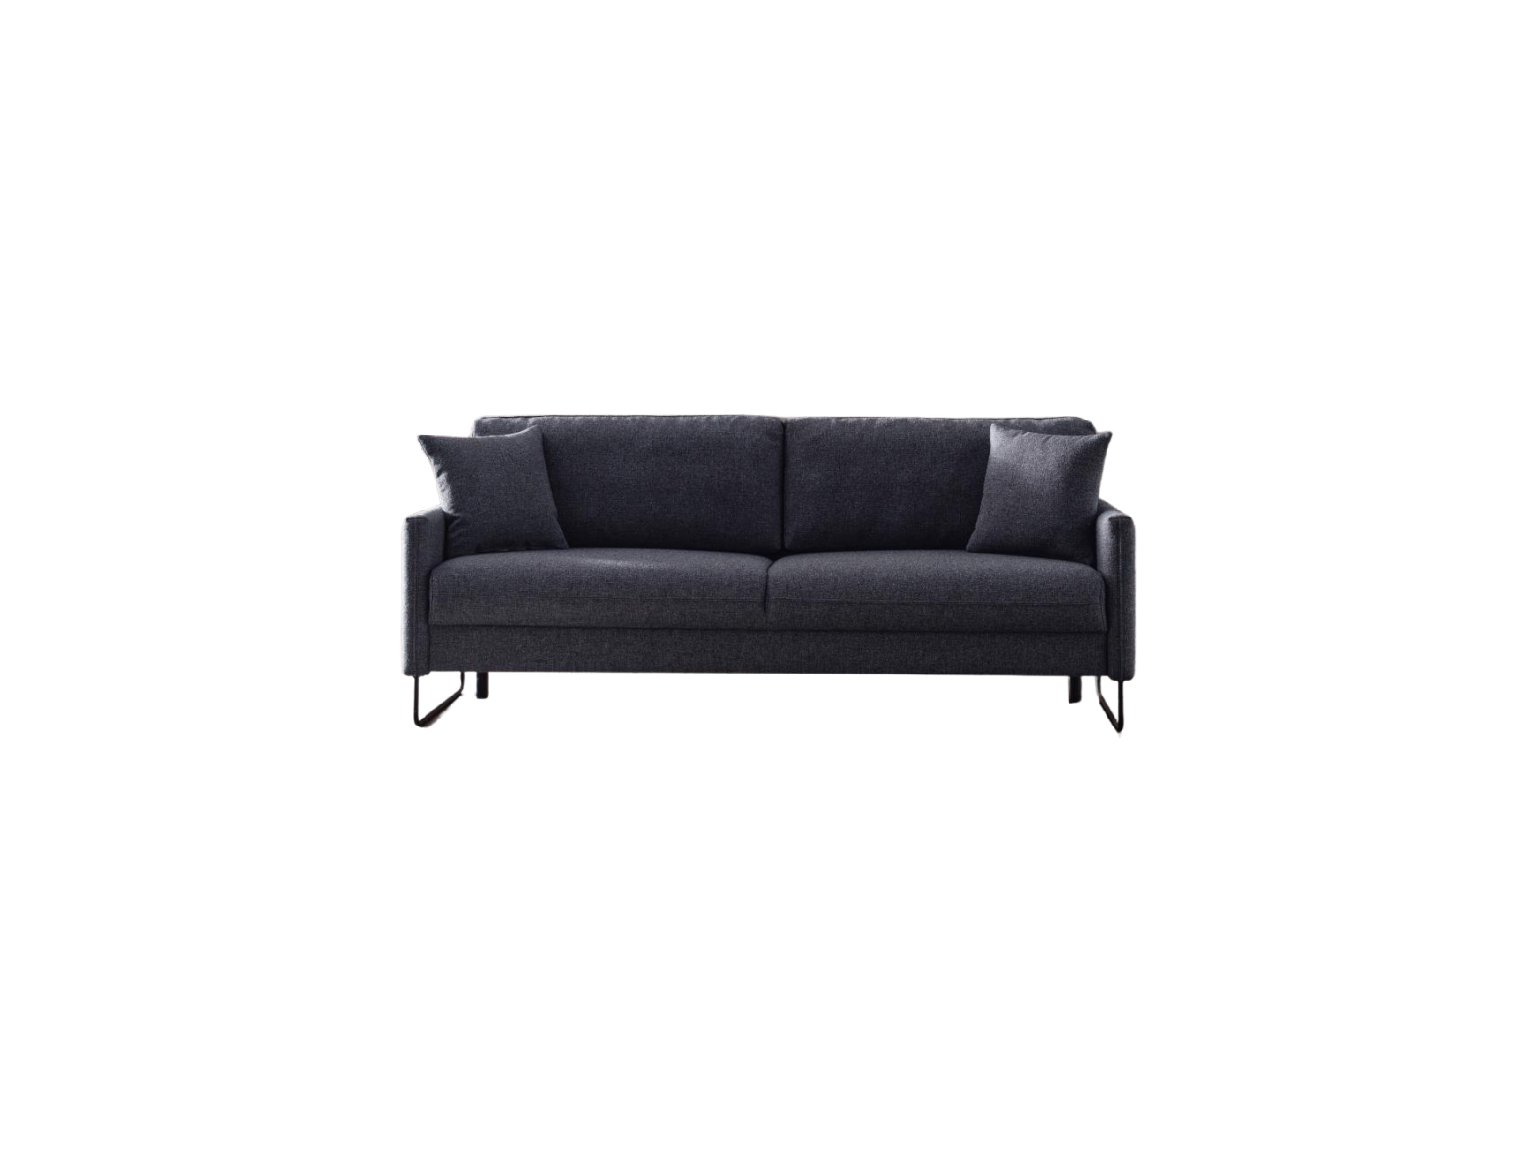 Laura Comfort 3 Seat Sleeper - Home Store Furniture